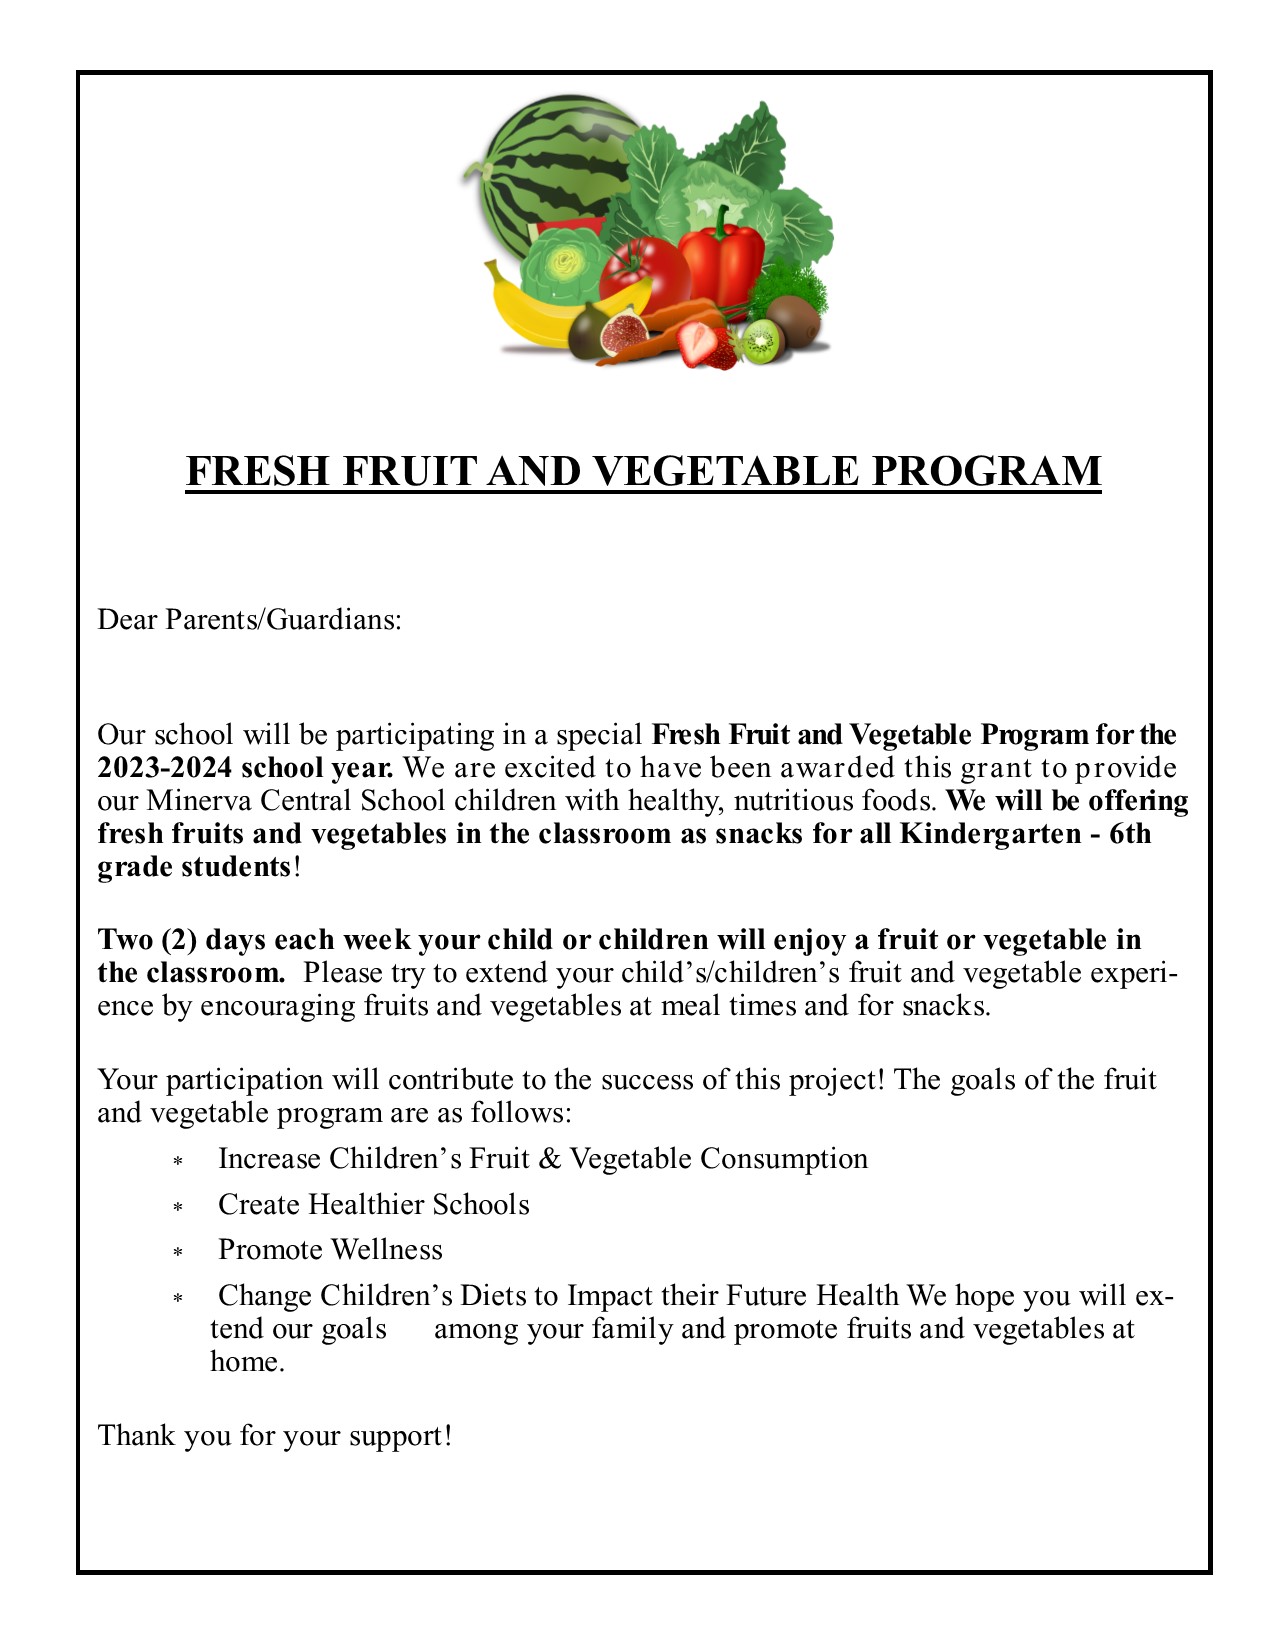 Fruits and veggies image